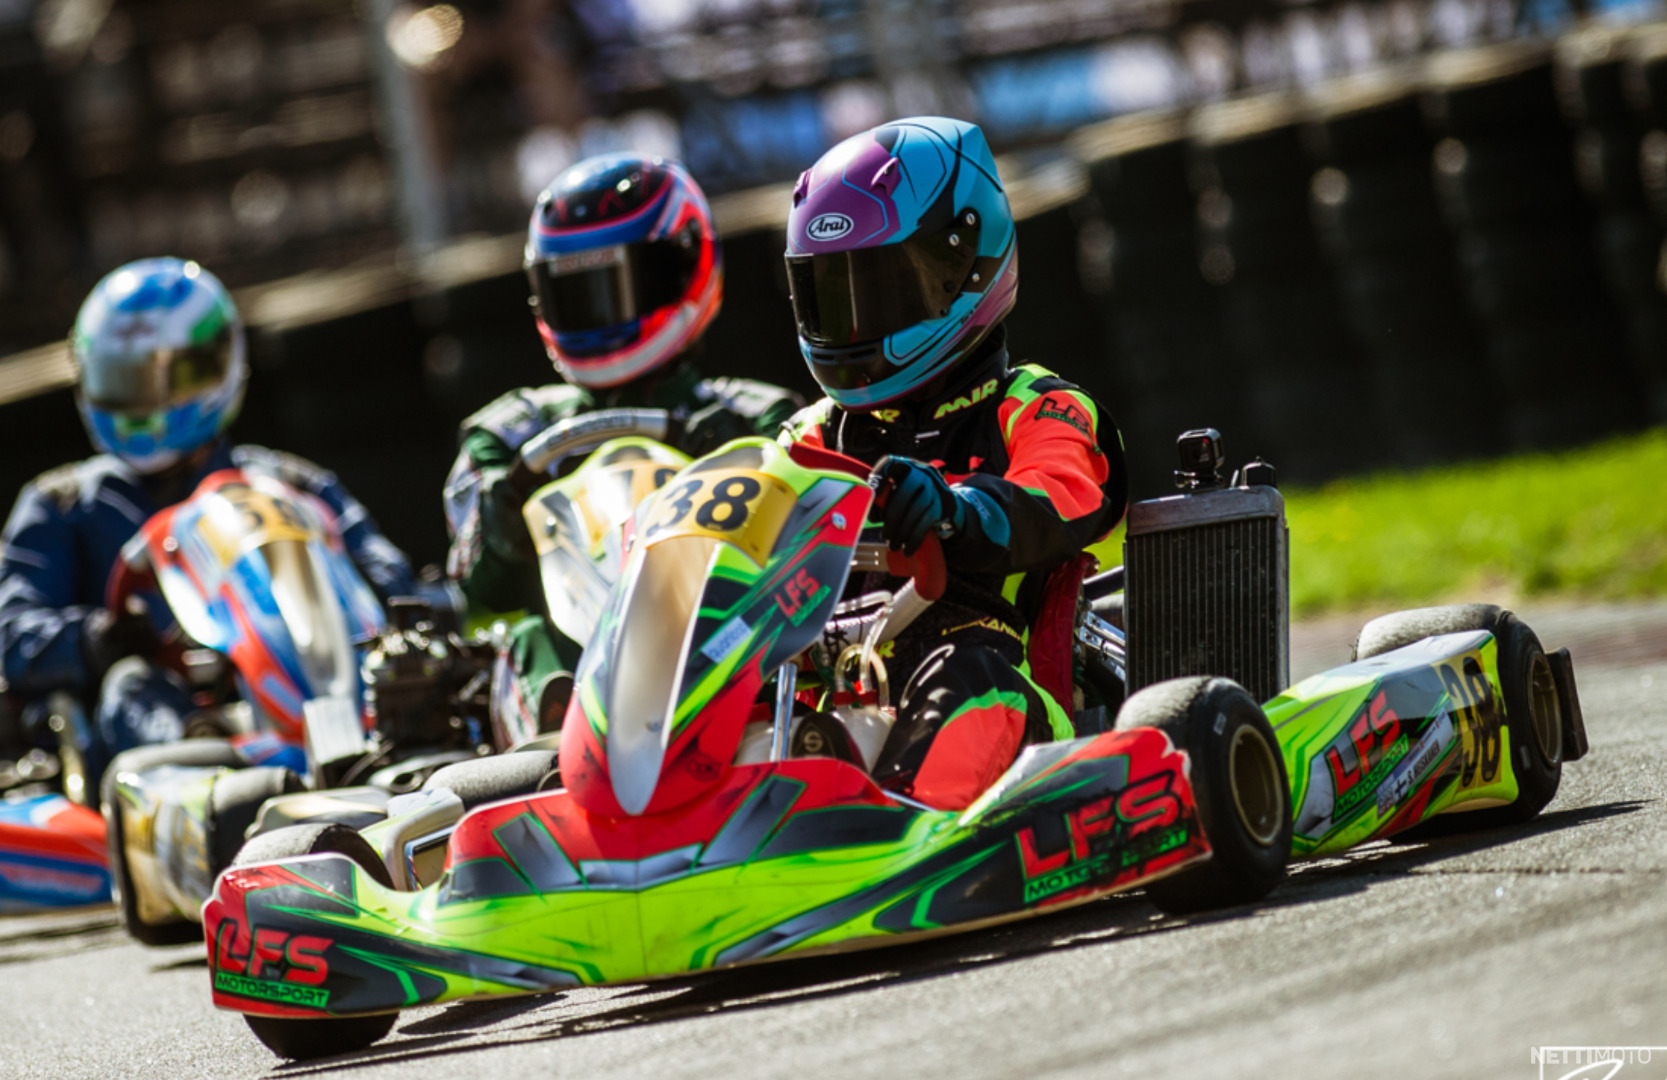 TonyKart - Racer 401R 125 cm³ 2021 - Espoo - Karting-autot - Nettimoto